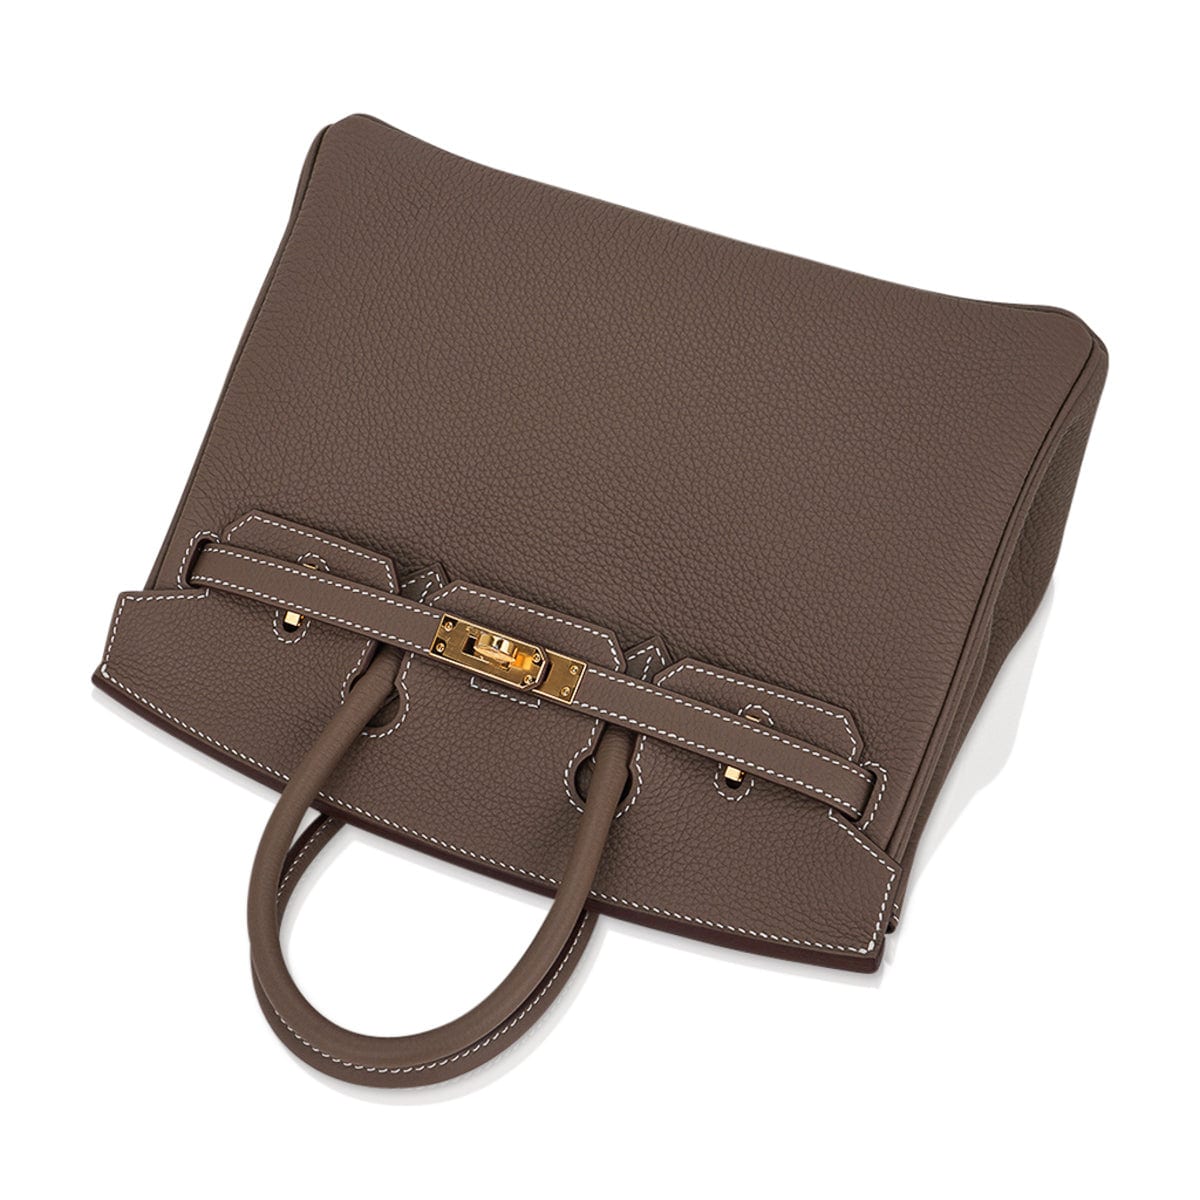 Hermes Birkin 25 Bag Etoupe Togo Leather with Gold Hardware